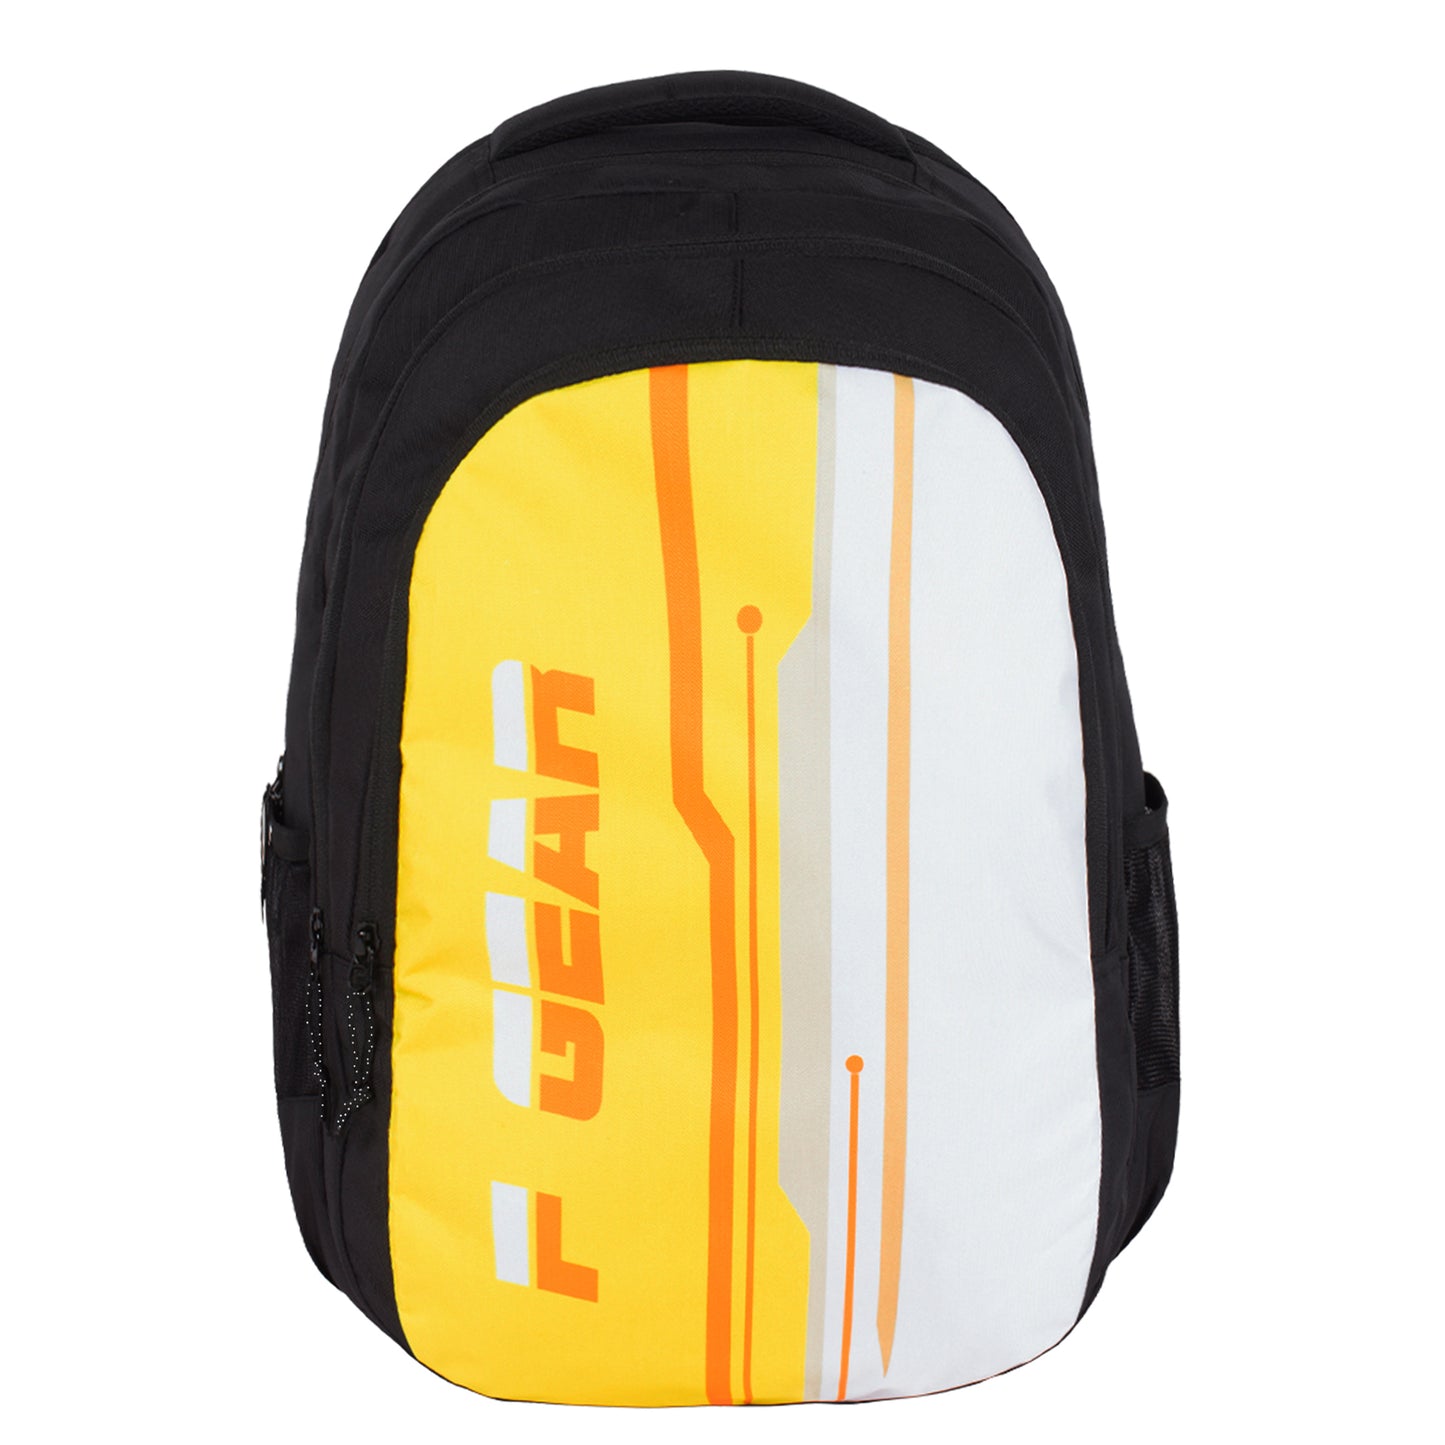 Galileo 29L Yellow Black Backpack